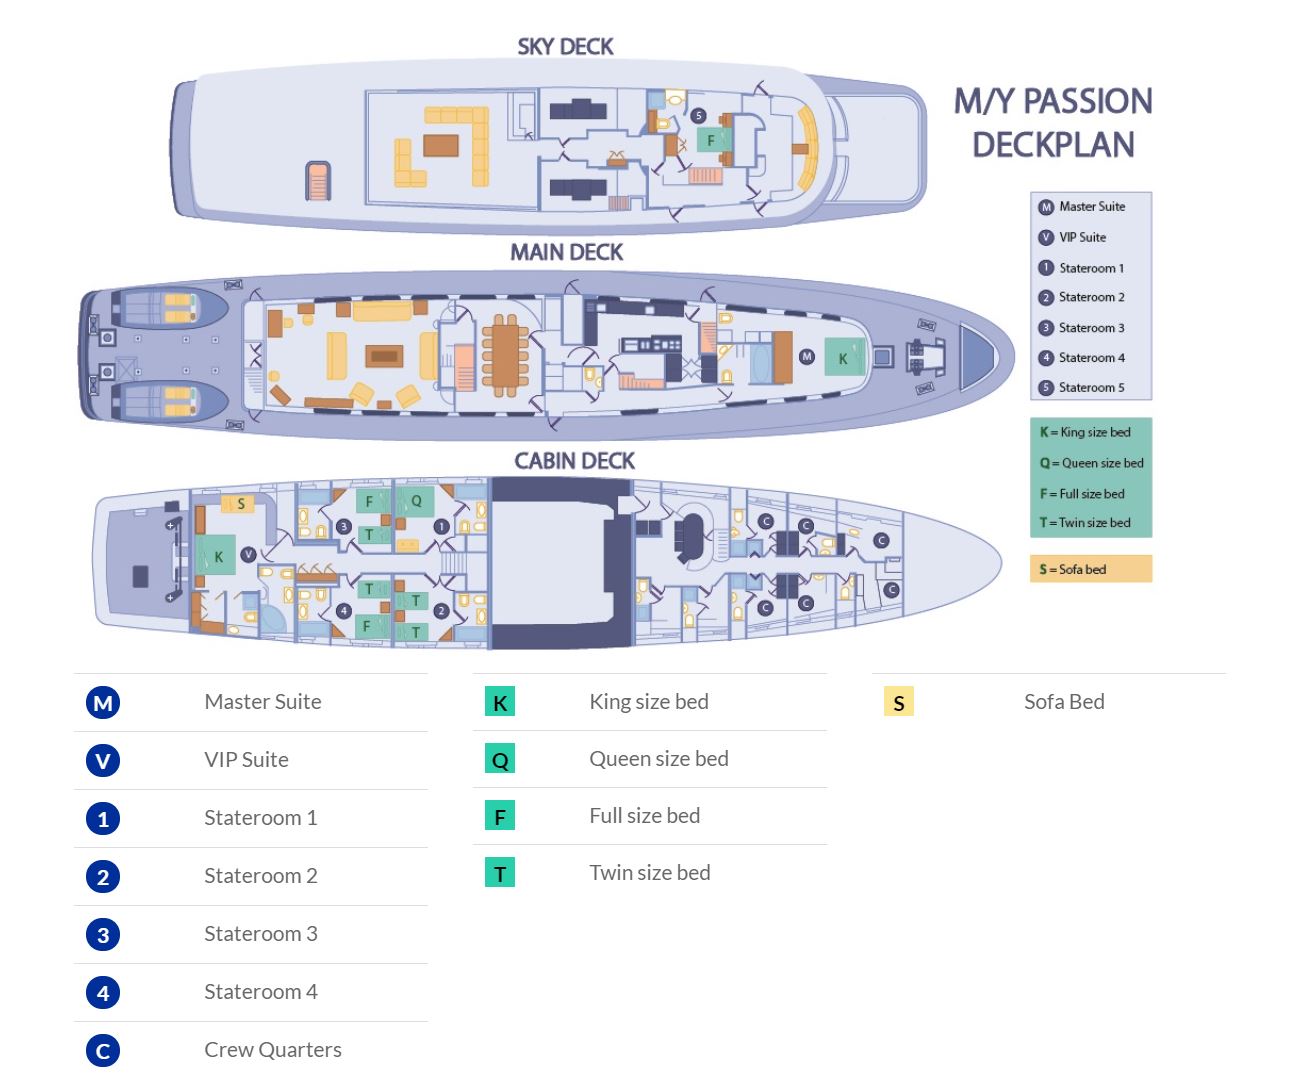 Passion luxury Yacht: Passion fantastic luxury Yacht